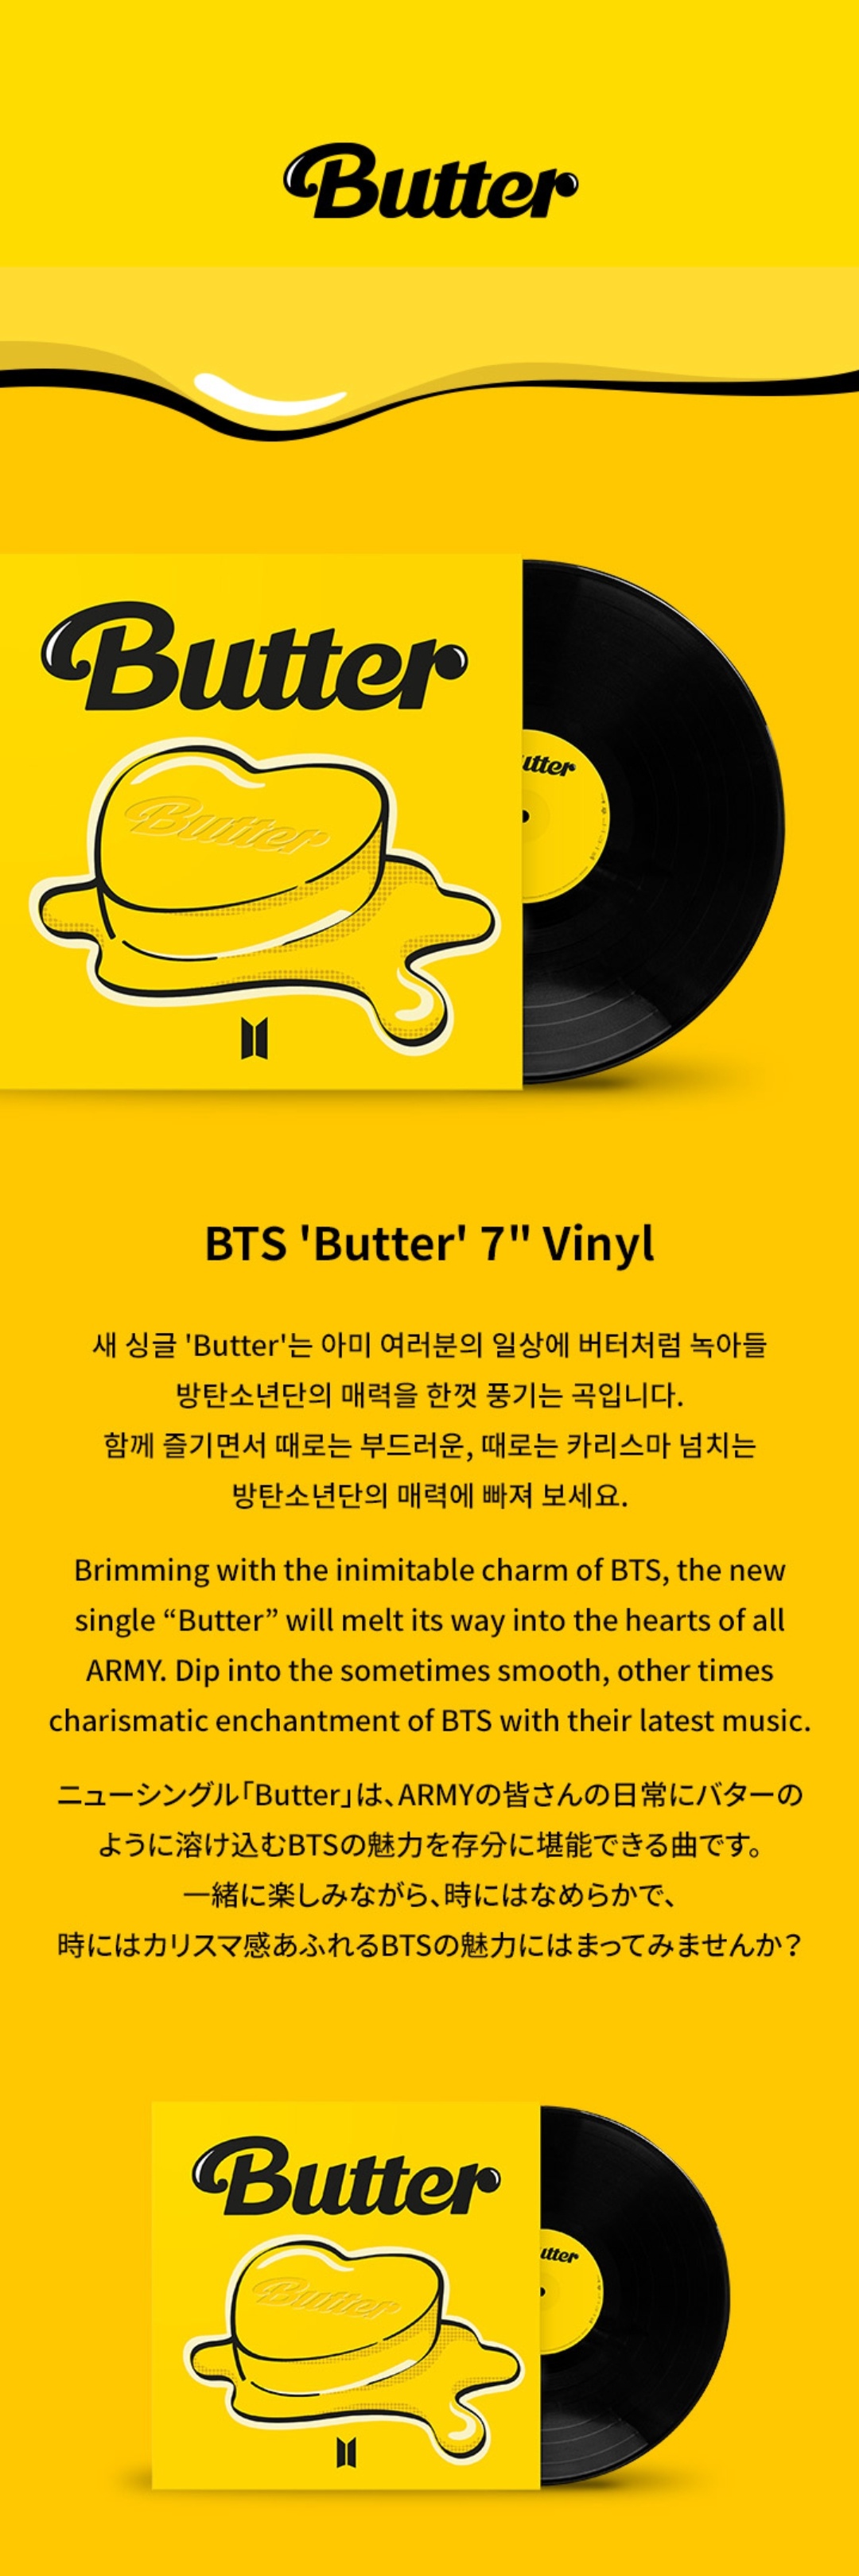 BTS Butter 7inch vinyl